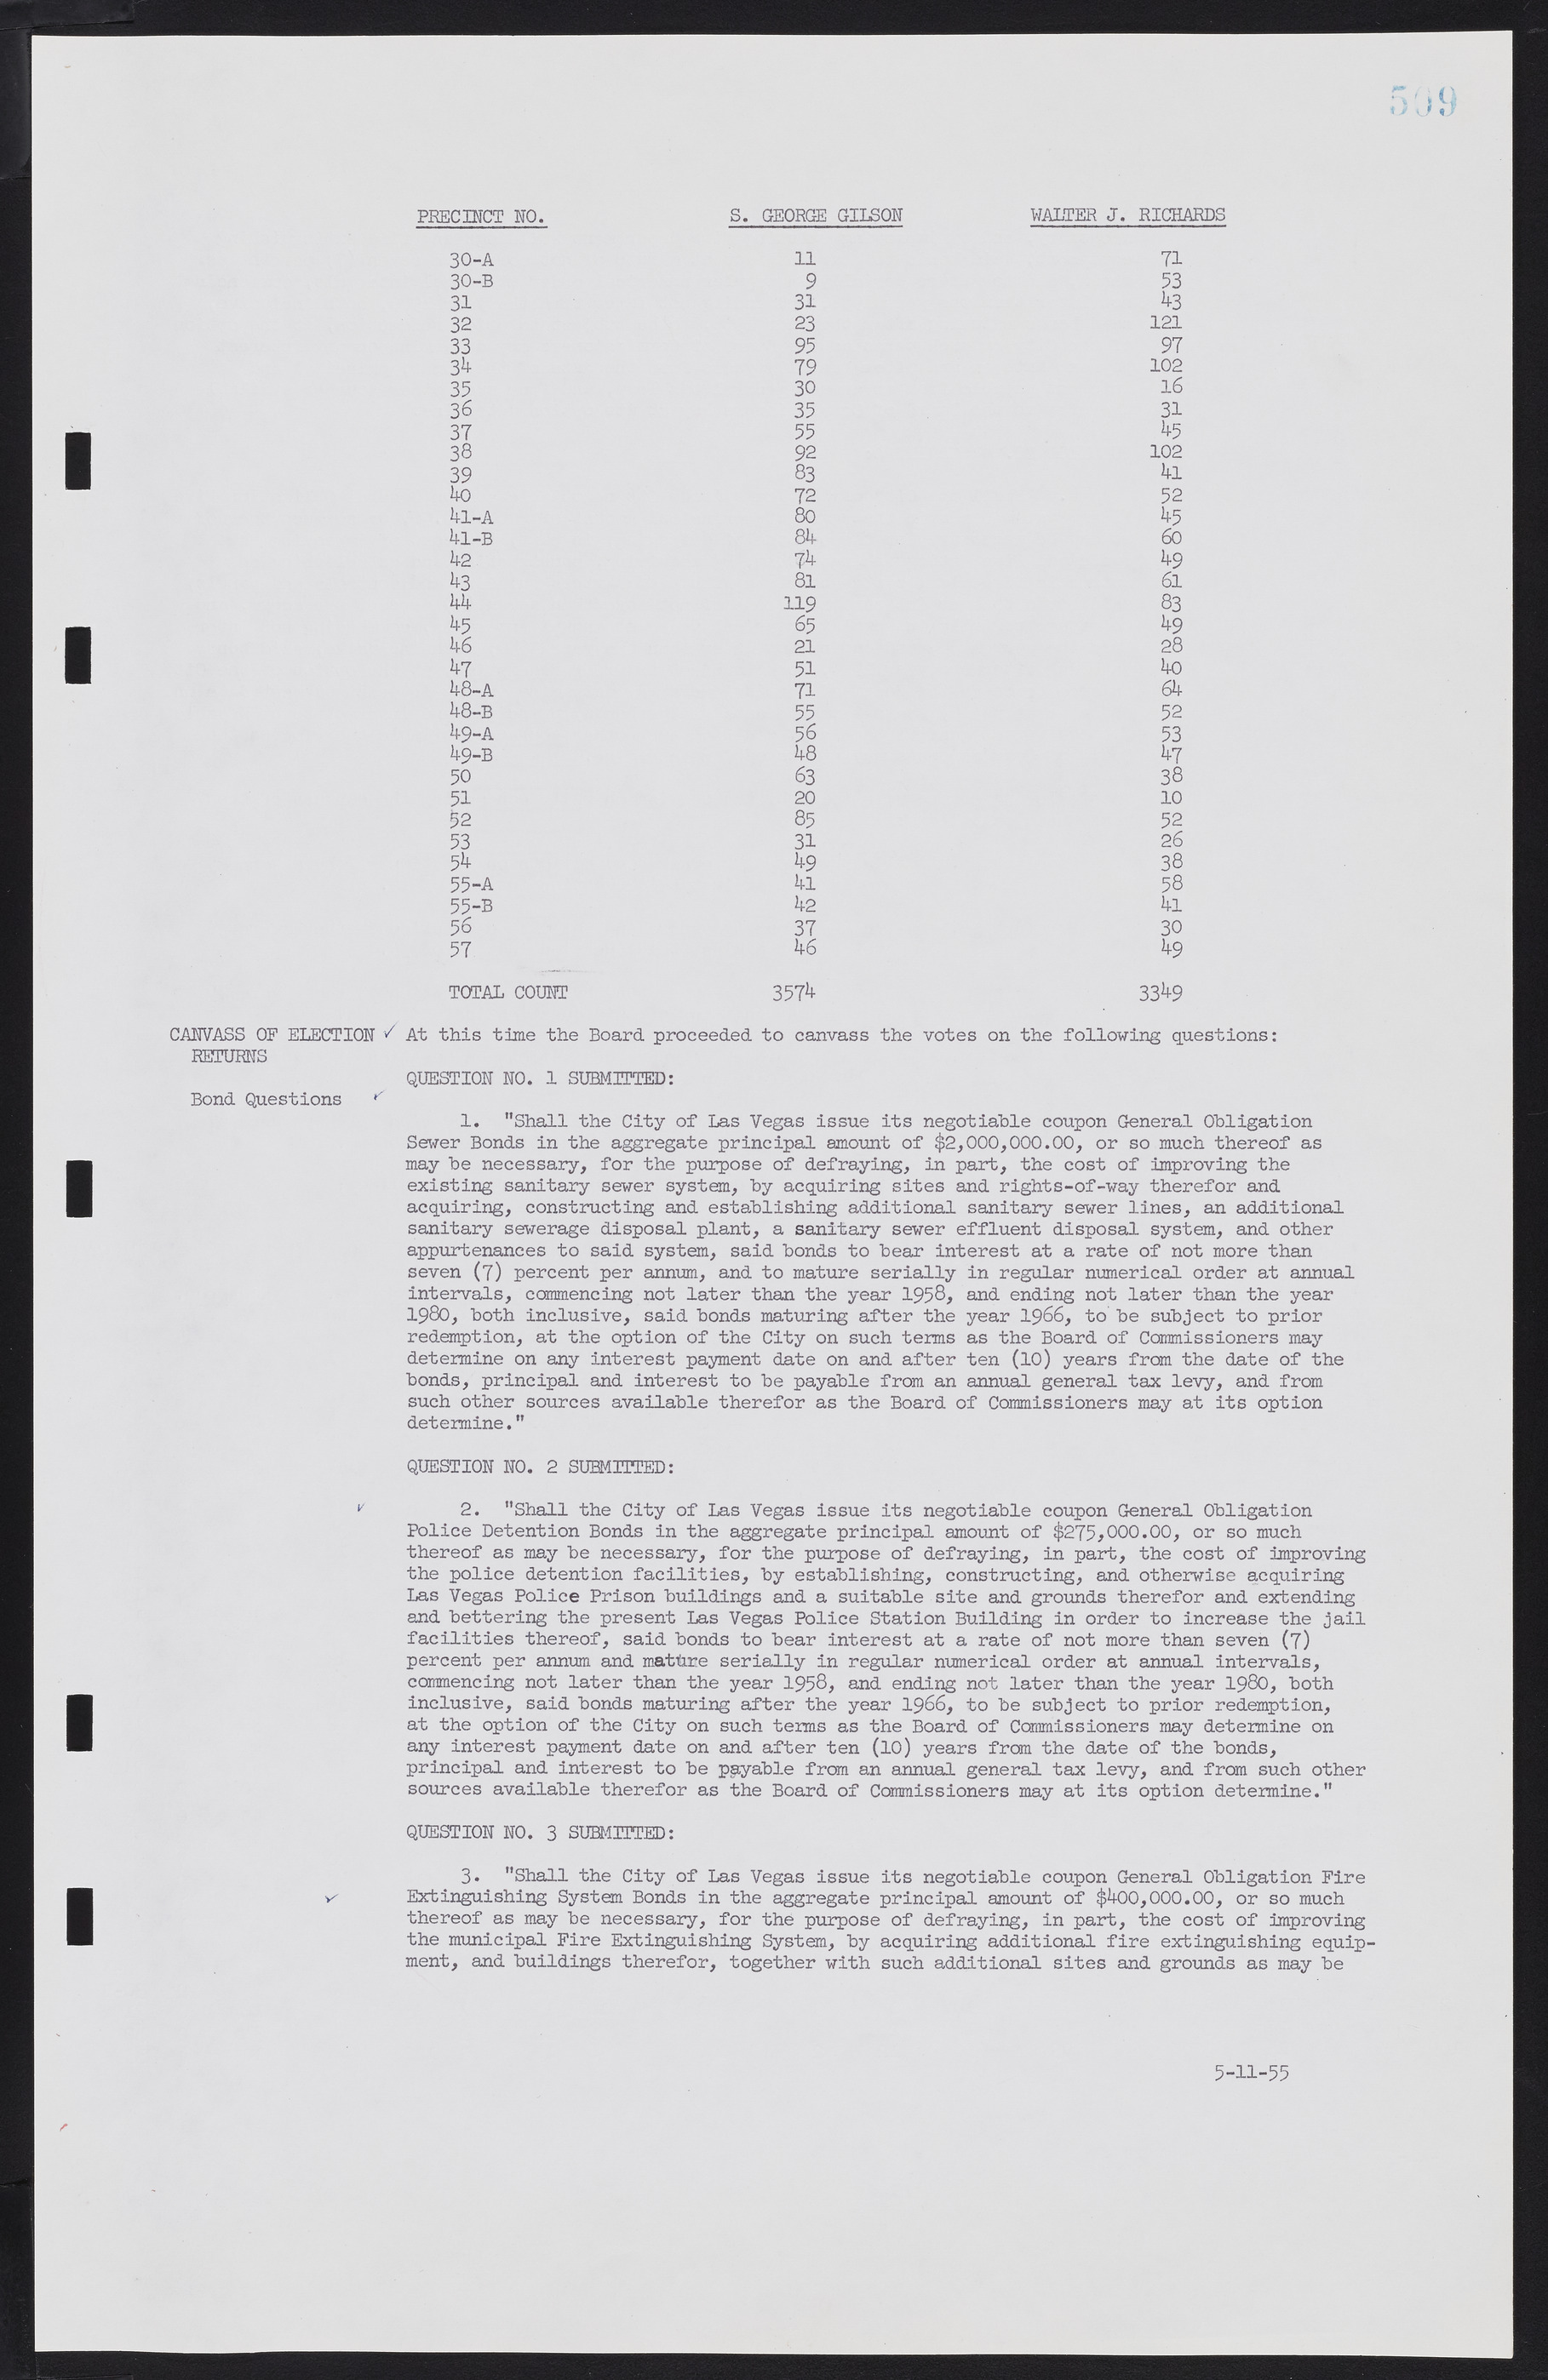 Las Vegas City Commission Minutes, February 17, 1954 to September 21, 1955, lvc000009-515